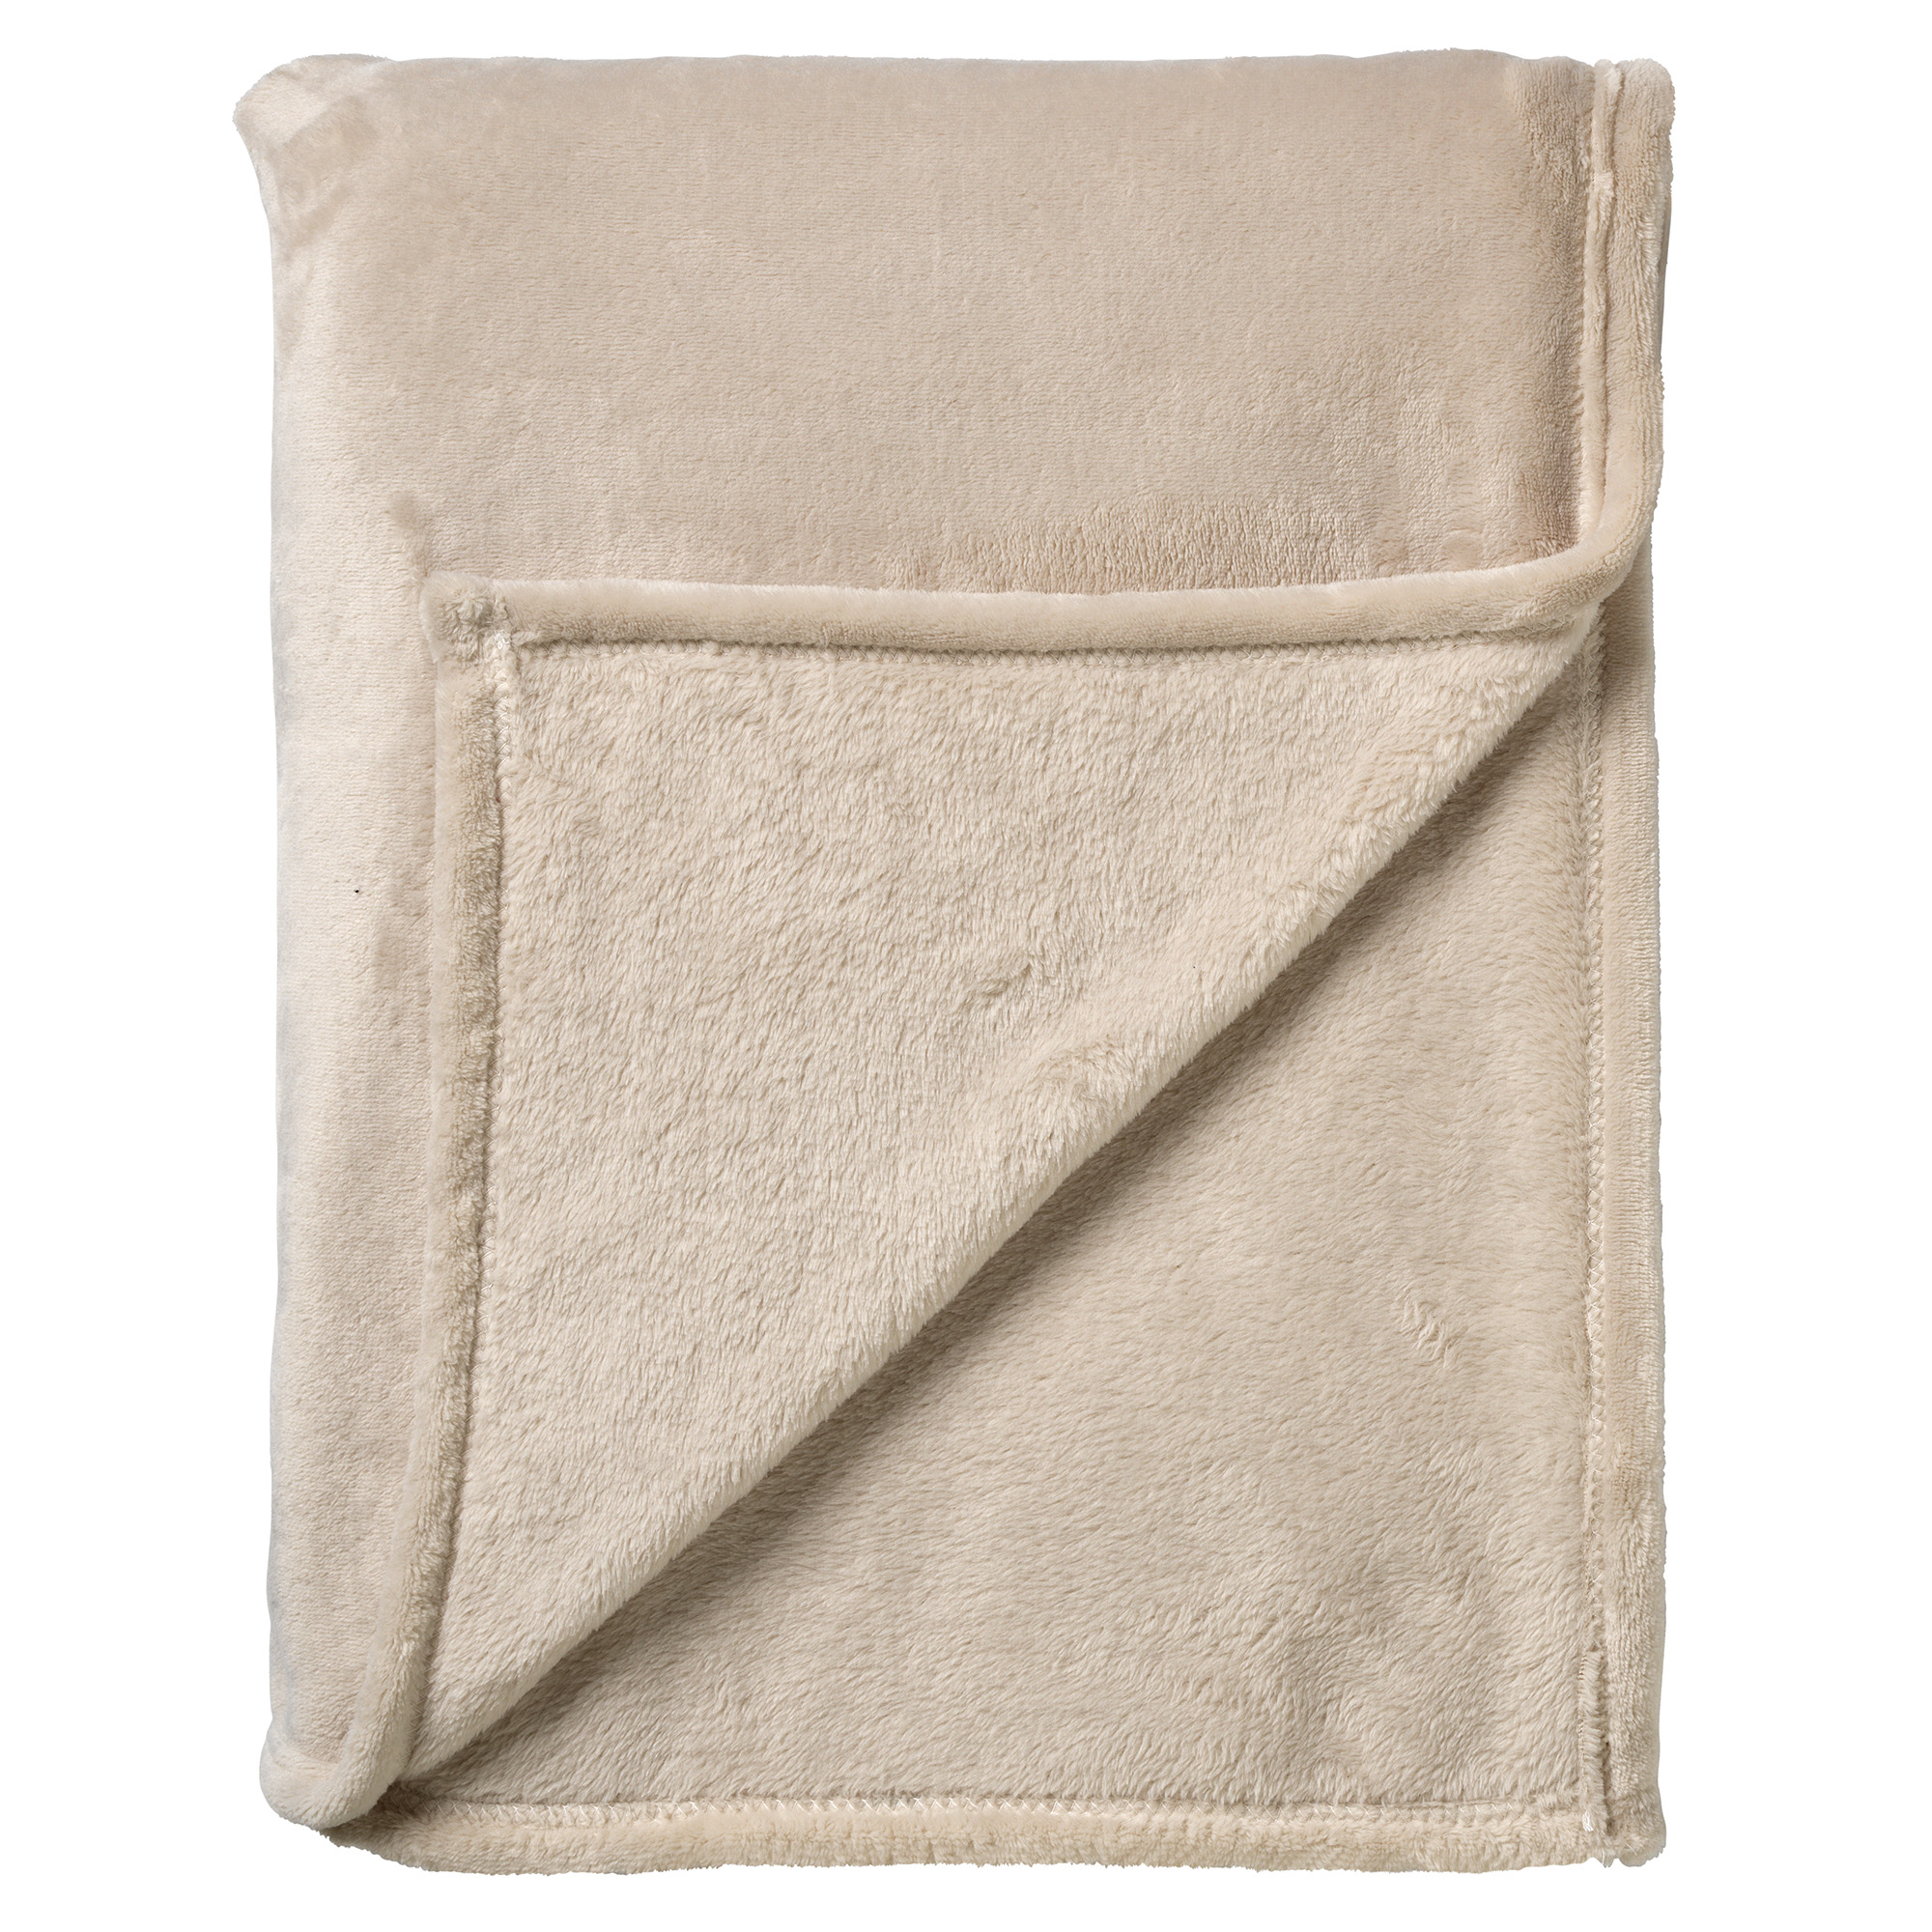 CHARLIE - Plaid flannel fleece XL - 200x220 cm - Pumice Stone - beige